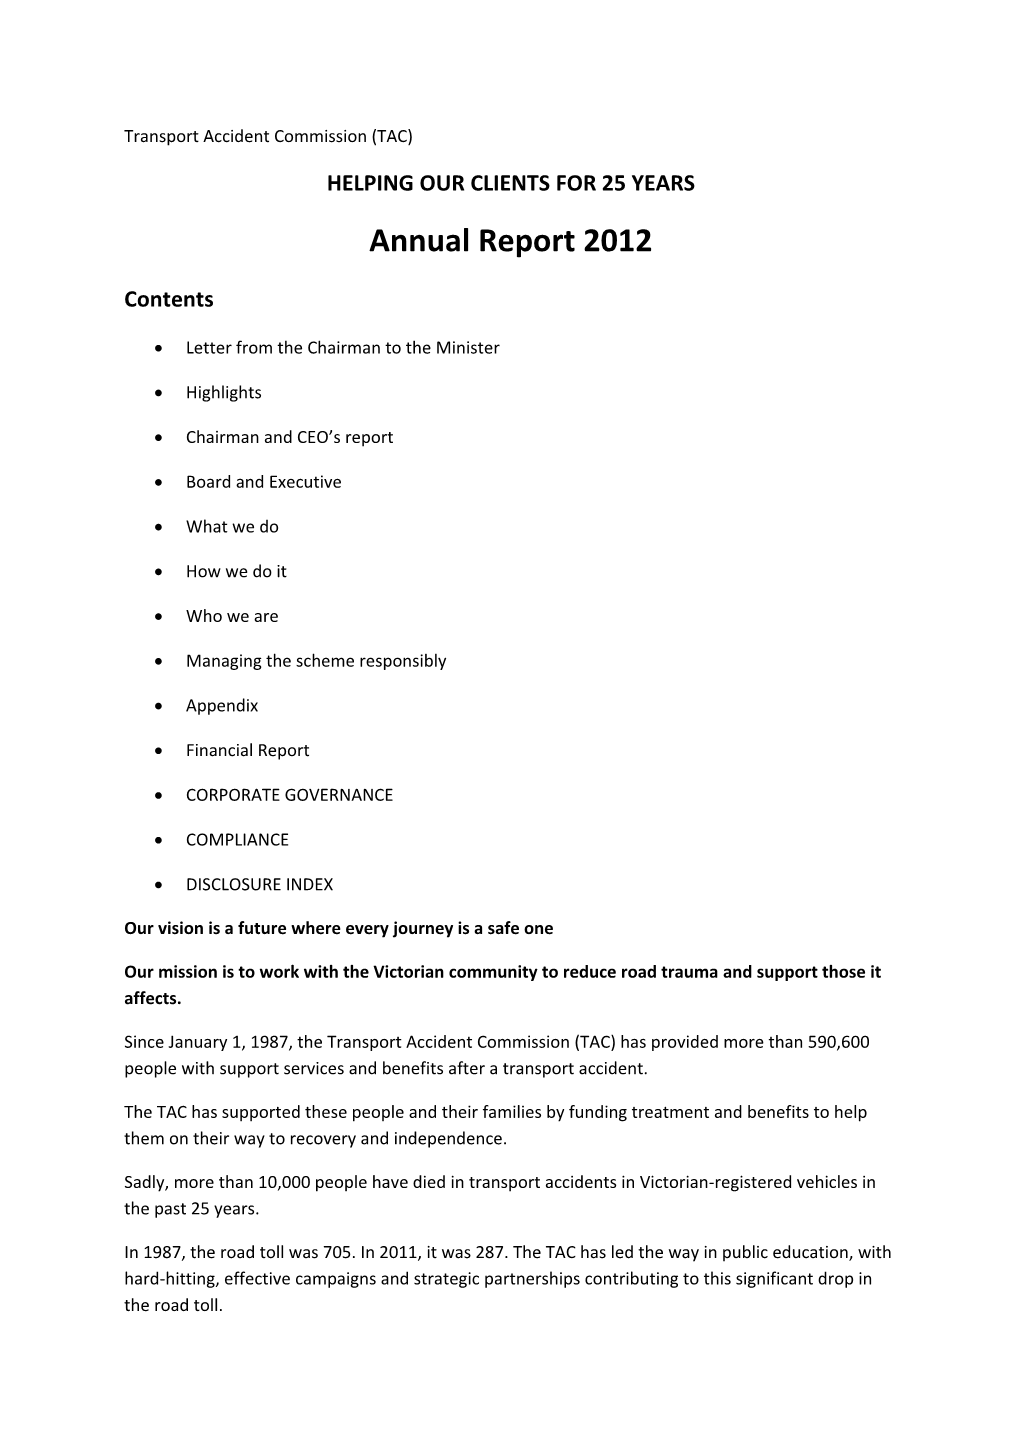 TAC Annual Report 2012